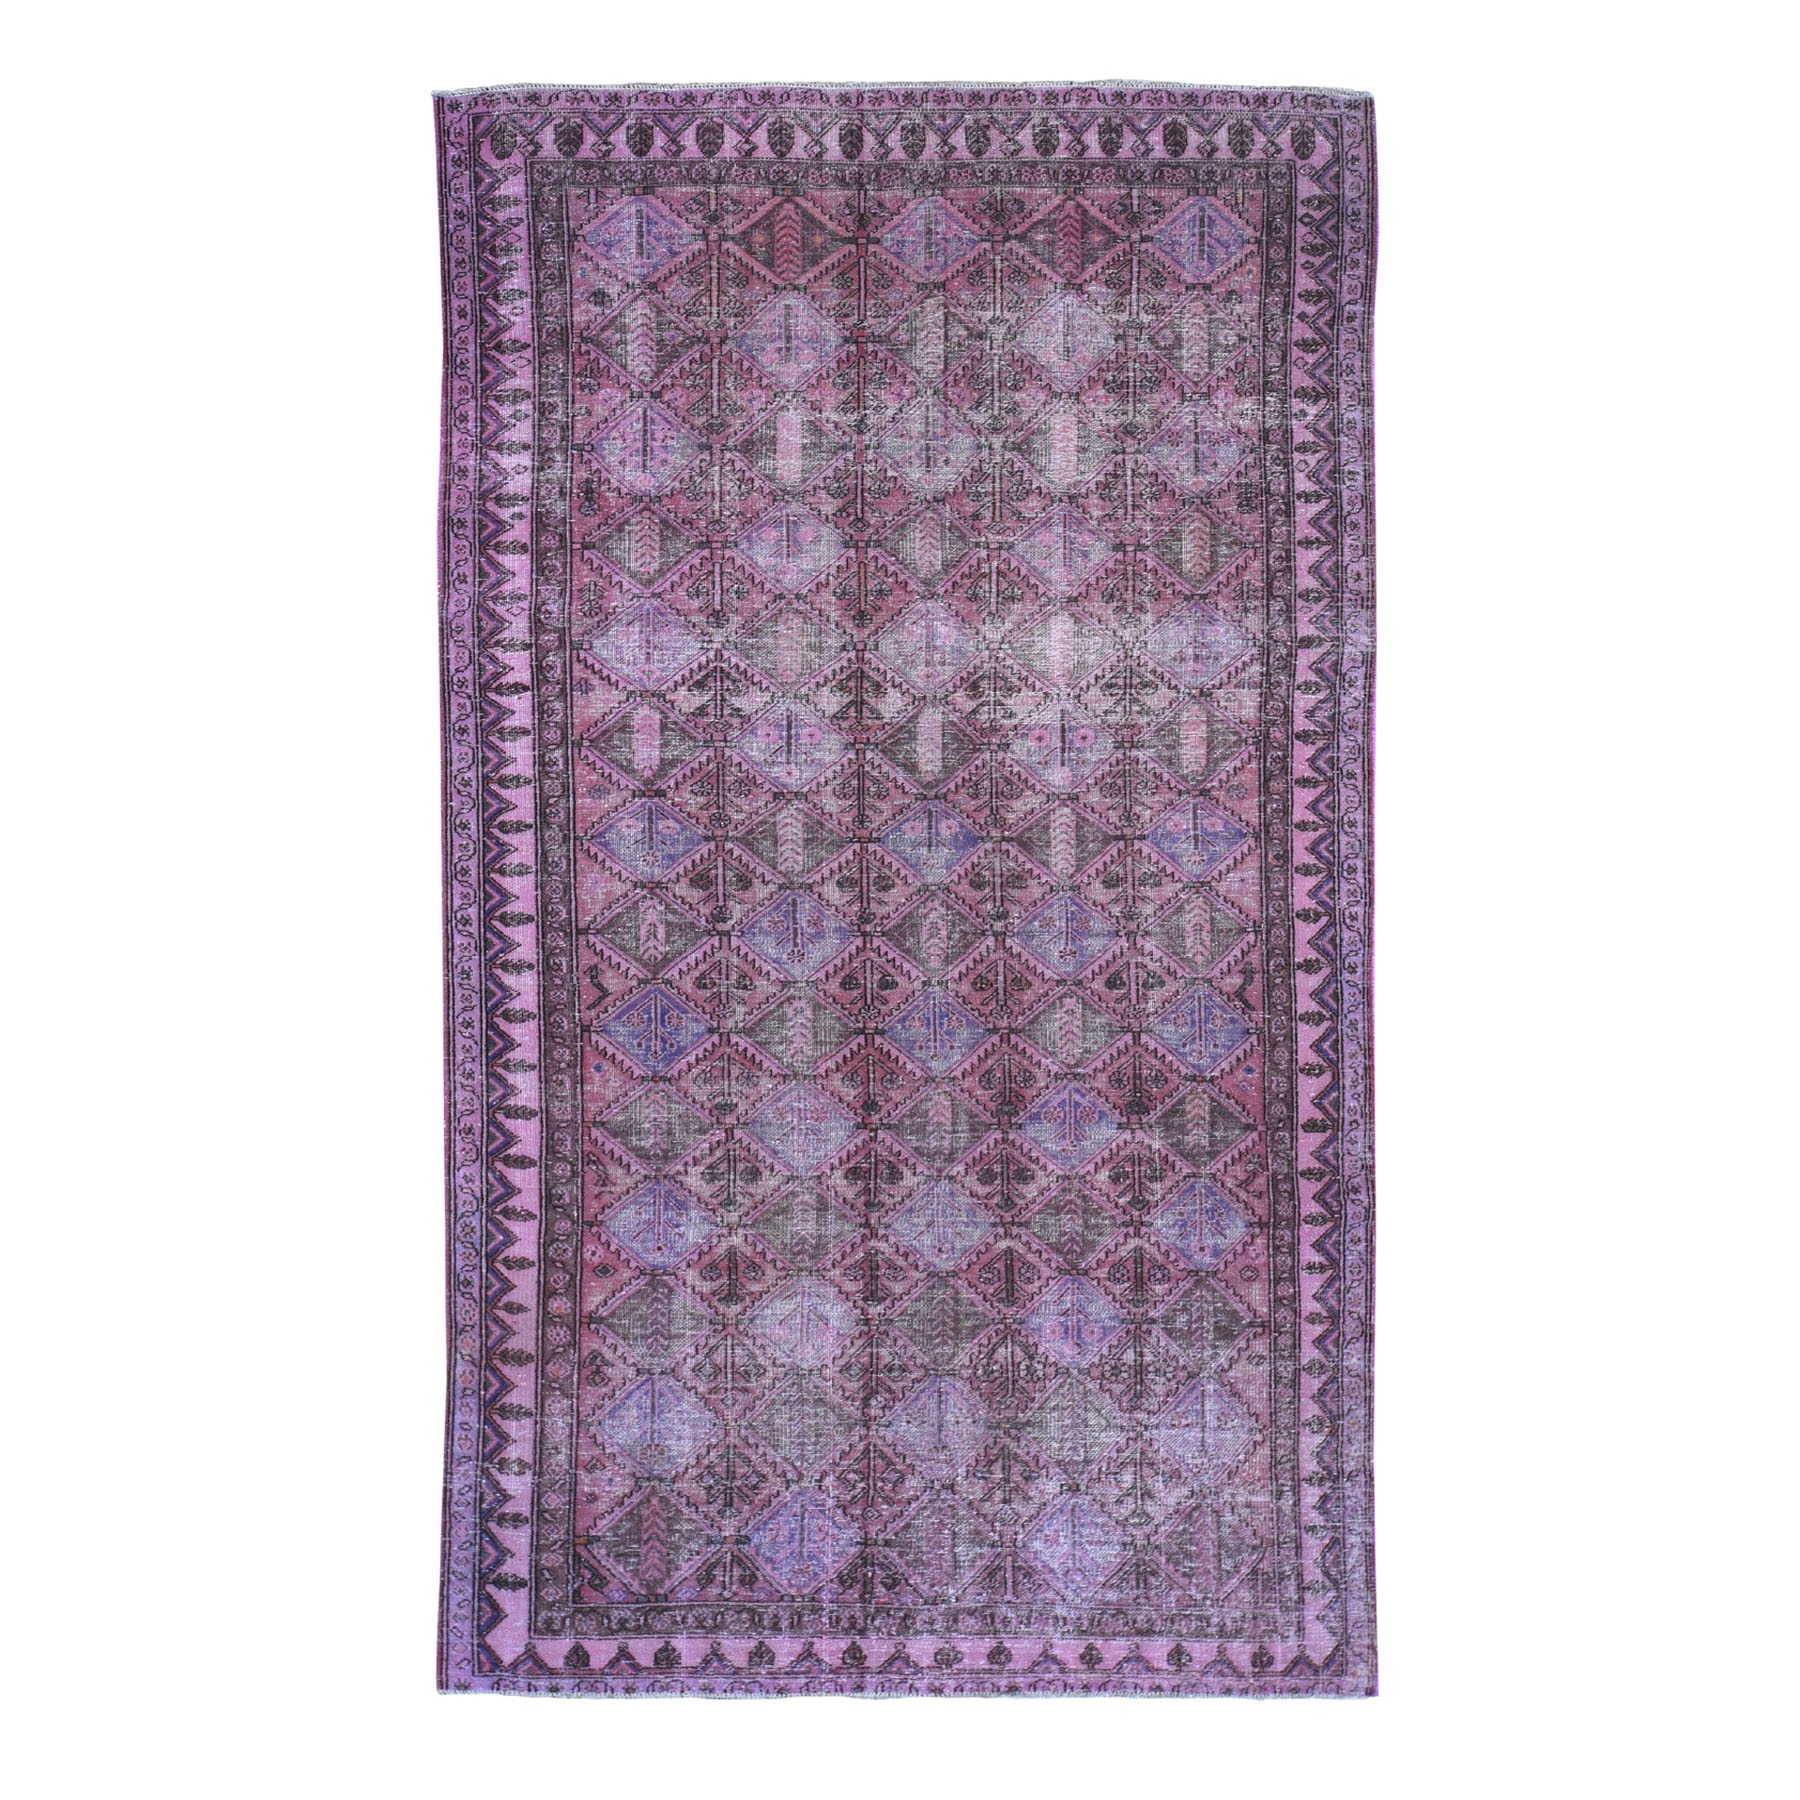 5'x9'3" Overdyed Persian Bakhtiari Worn Pile Wide Runner Hand Woven Oriental Rug 